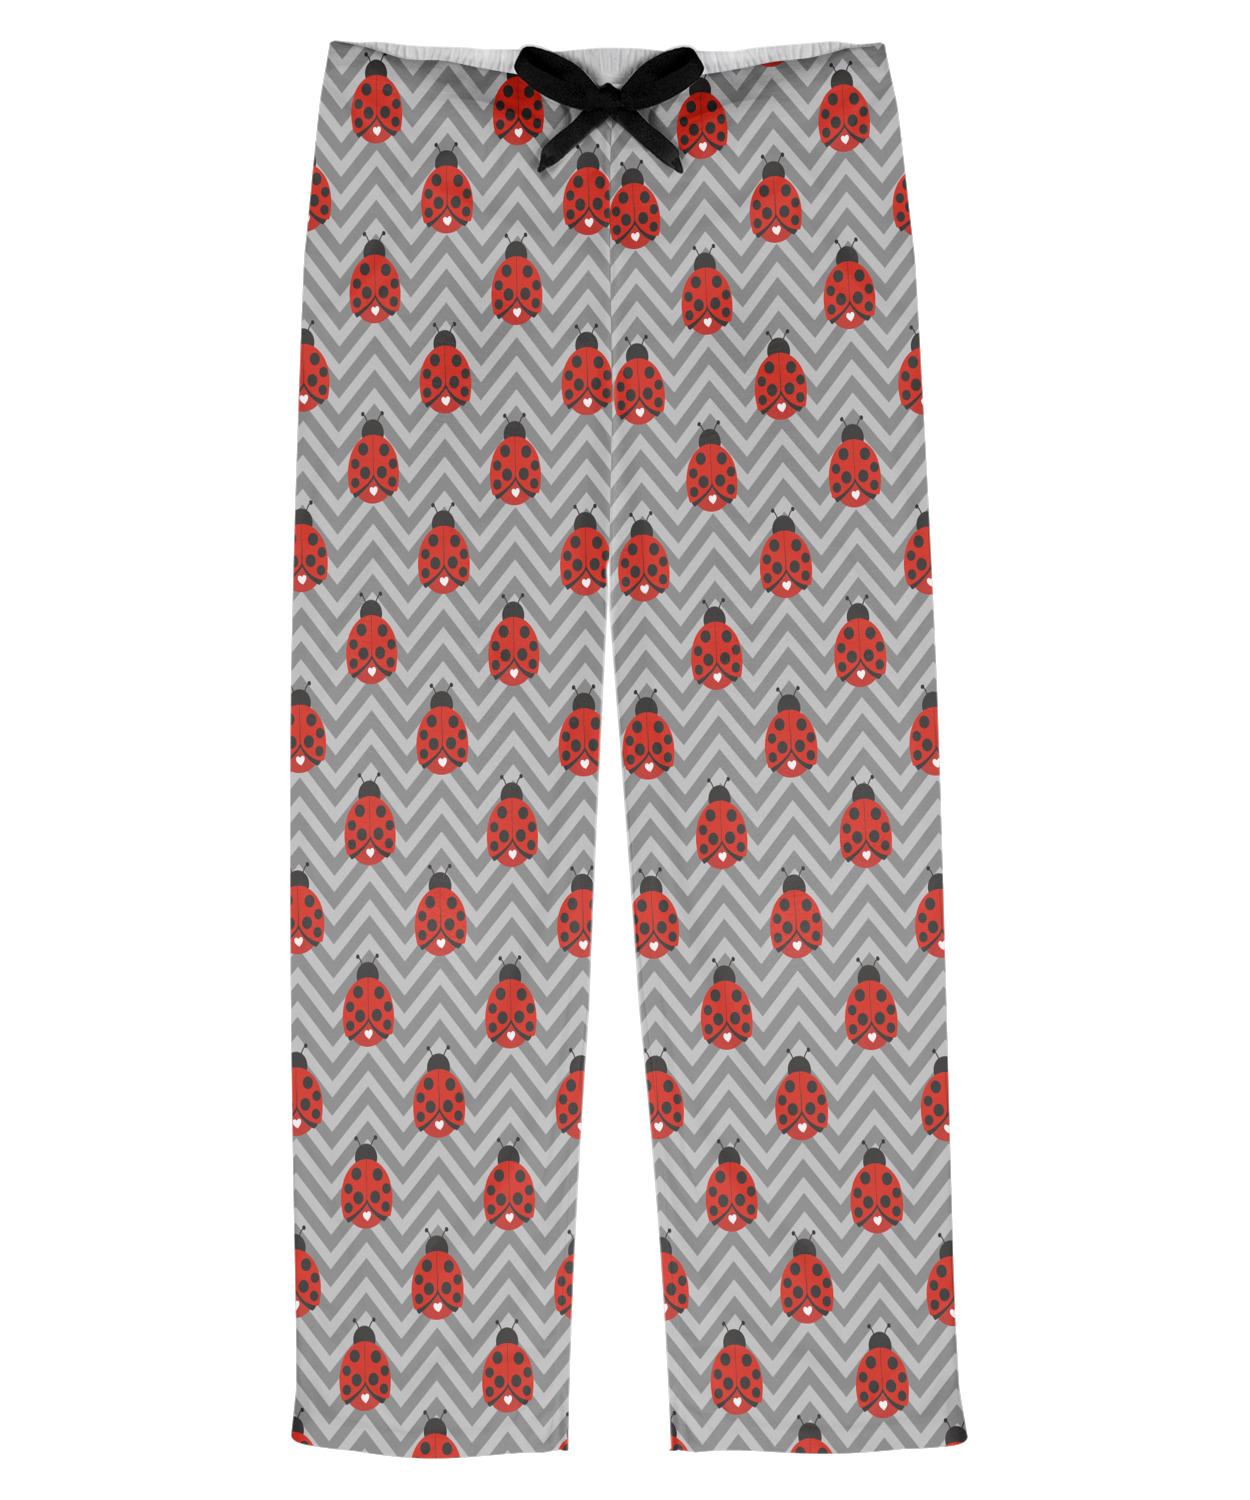 Ladybugs & Chevron Mens Pajama Pants - M (Personalized) - YouCustomizeIt